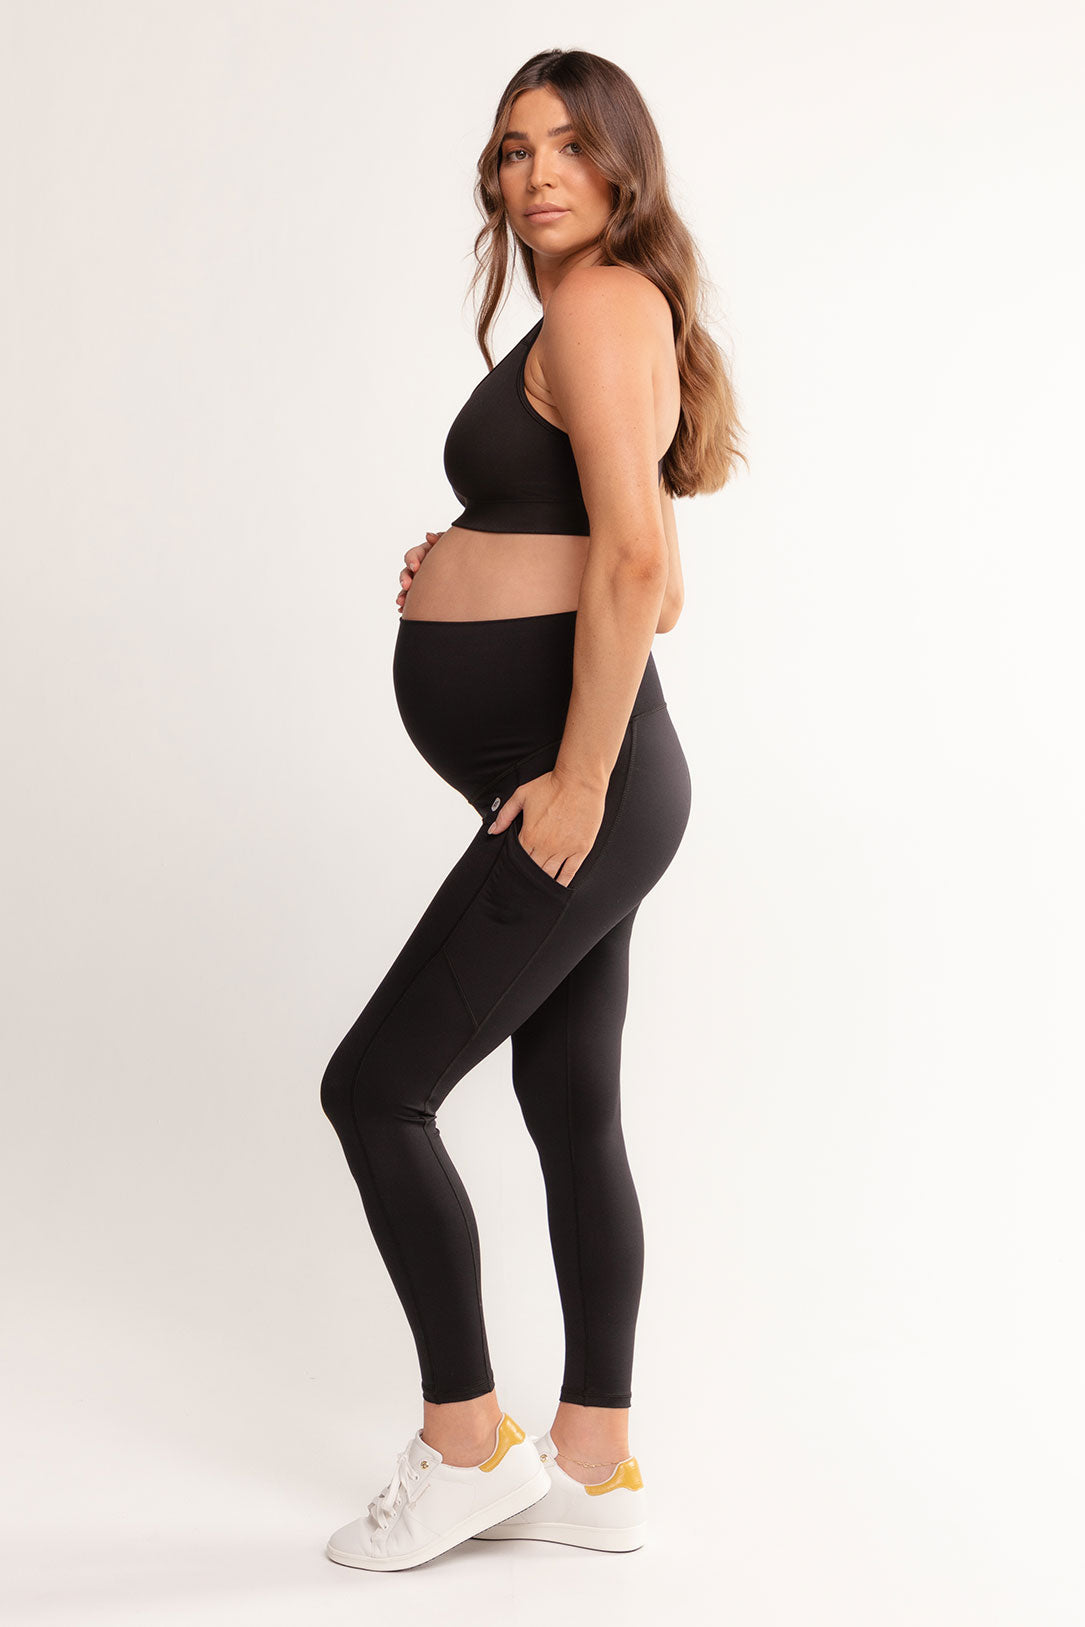 Black Maternity Leggings  Women's Maternity Workout Tights